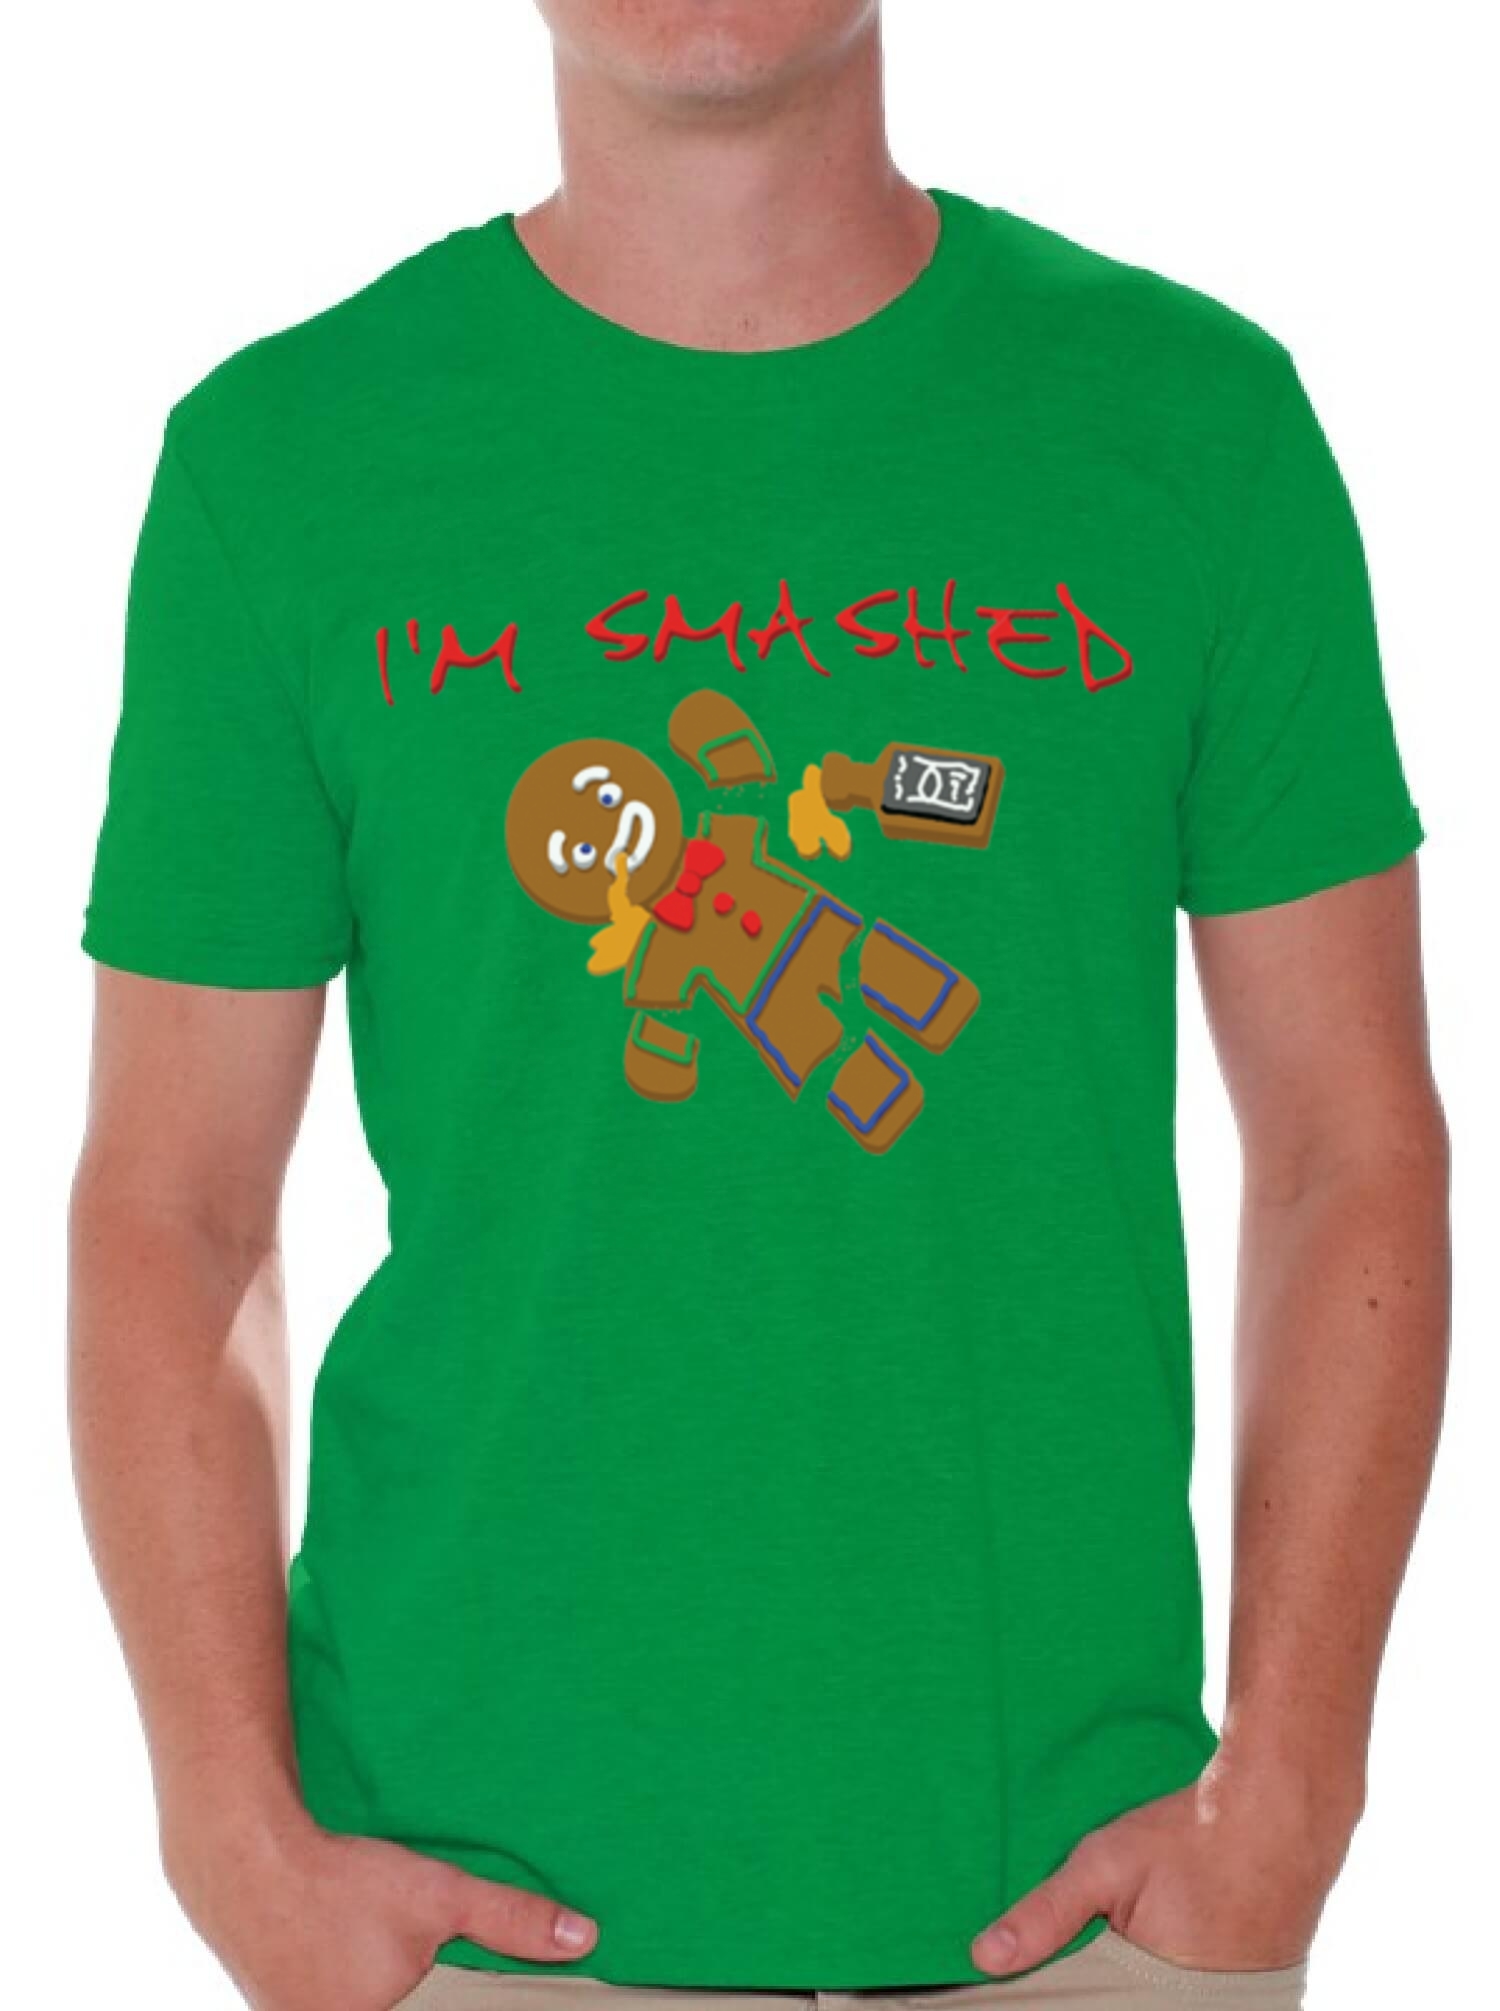 I'm Smashed Ugly Christmas T Shirt Funny Christmas Gifts for Men Xmas Shirt | eBay